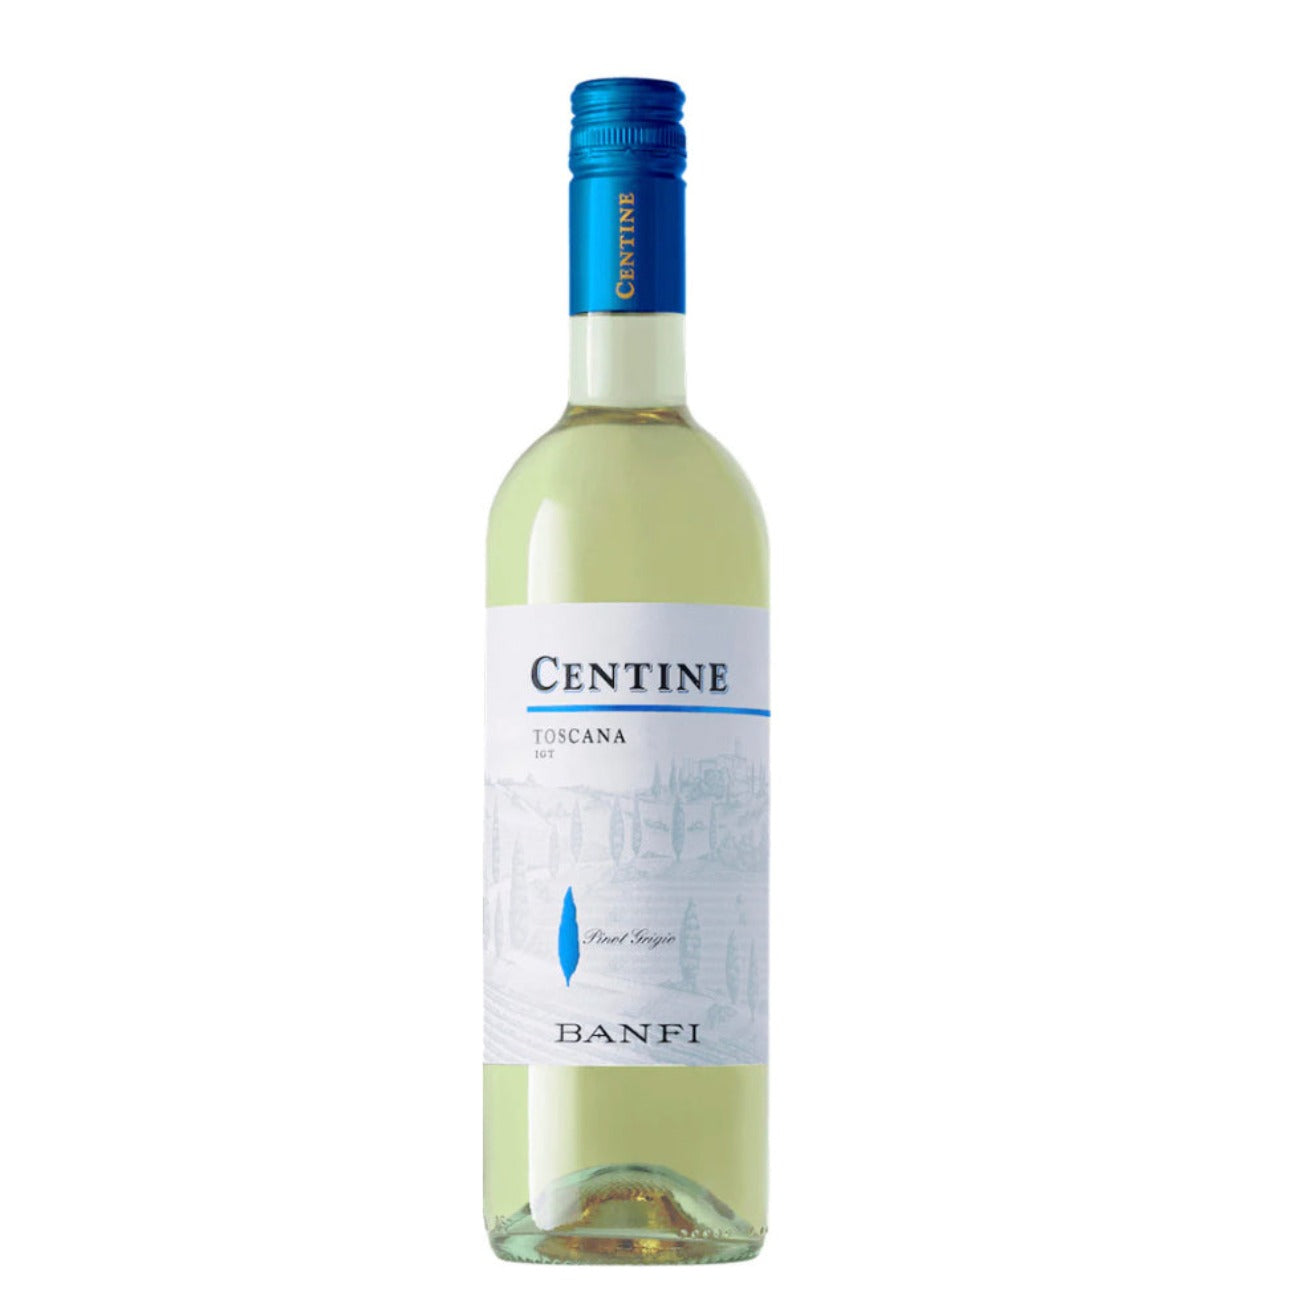 Banfi Centine Pinot Grigio Toscana 750ml